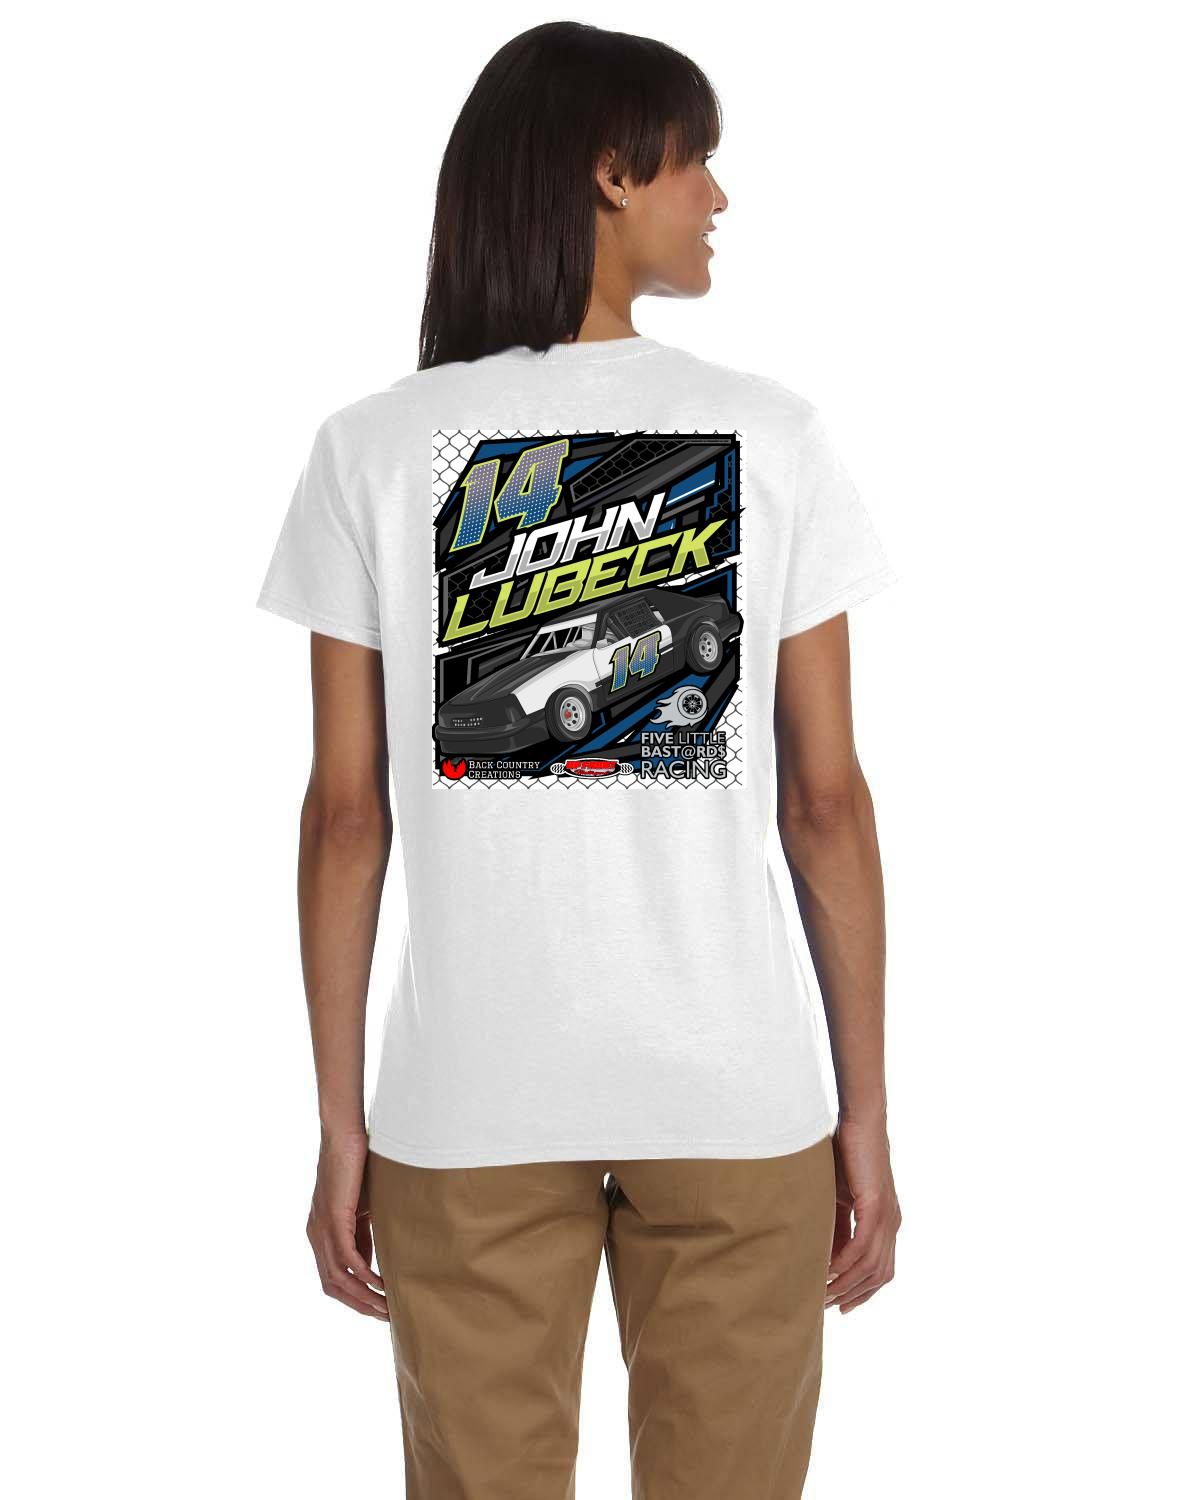 John Lubeck / Upfront Motorsports Ladies' T-Shirt